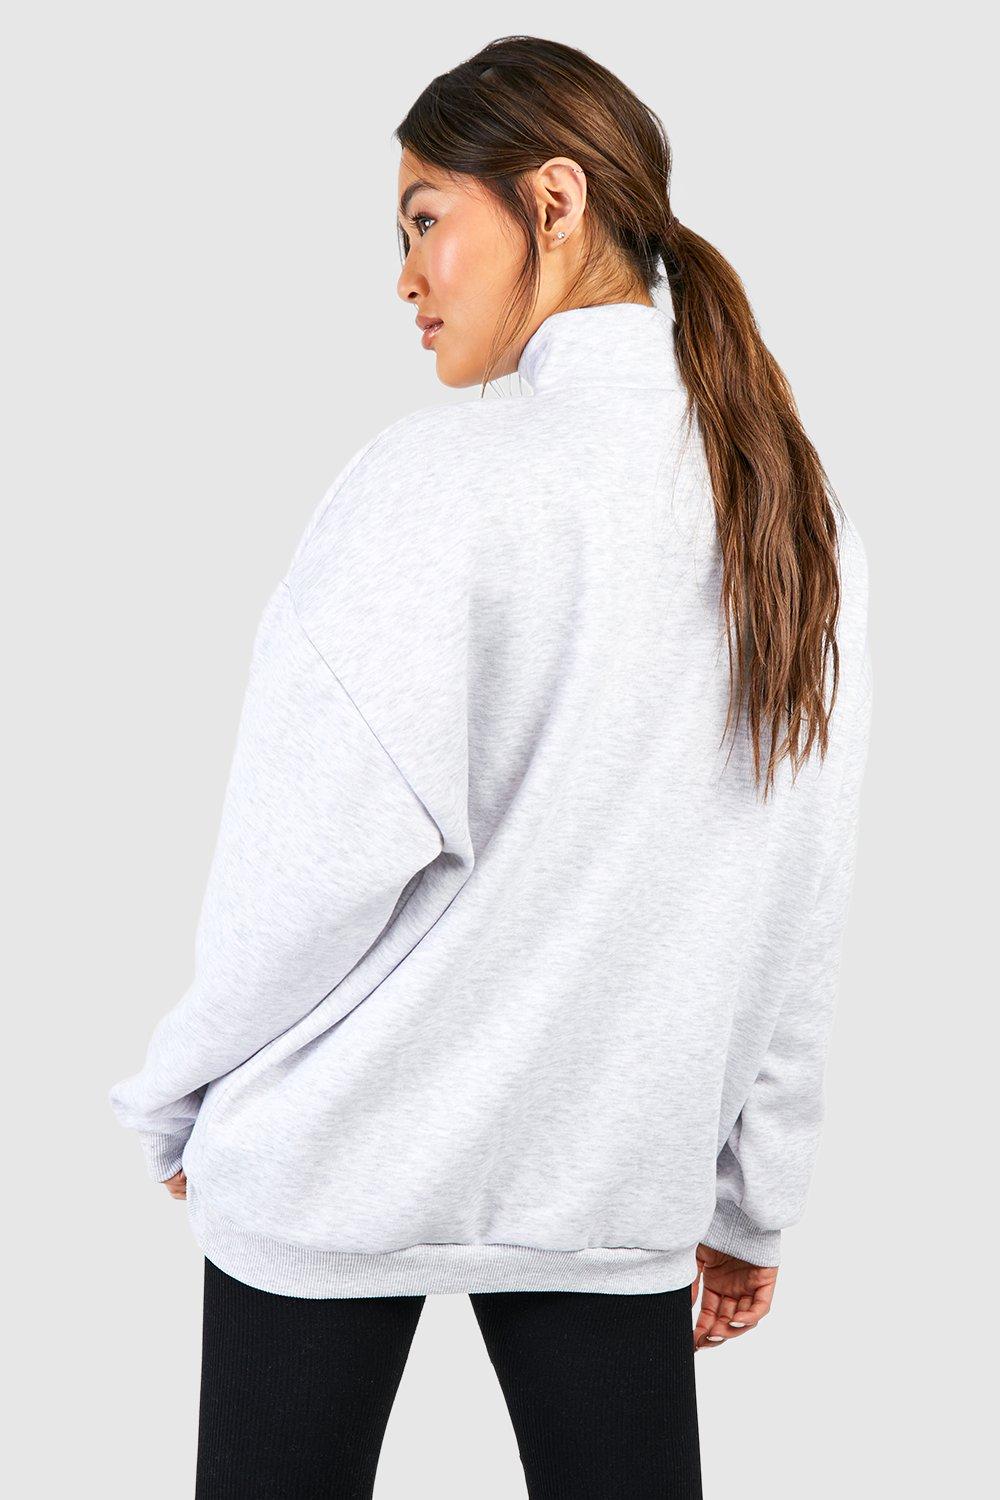 MOLayys Crop Sweatshirt,Women Half Zip Oversized Sweatshirts Long